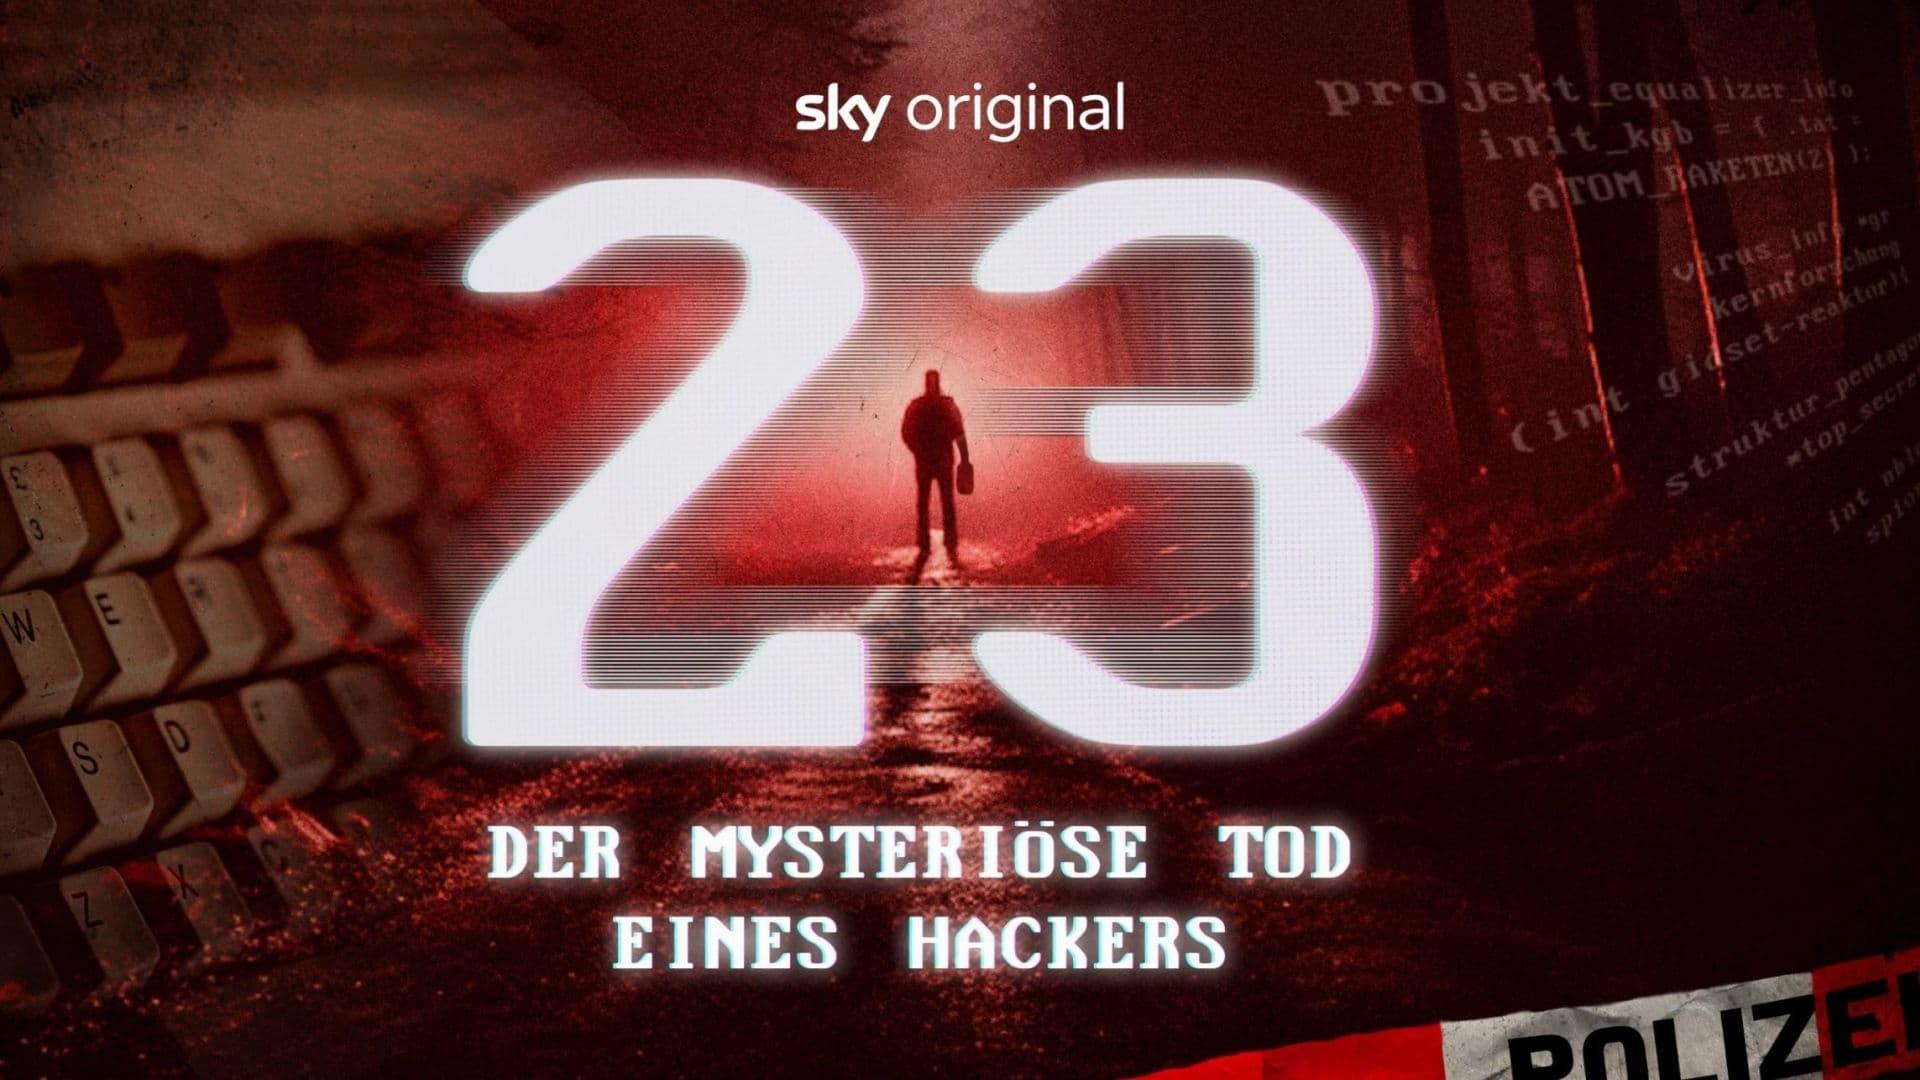 23 - Der mysteriöse Tod eines Hackers backdrop